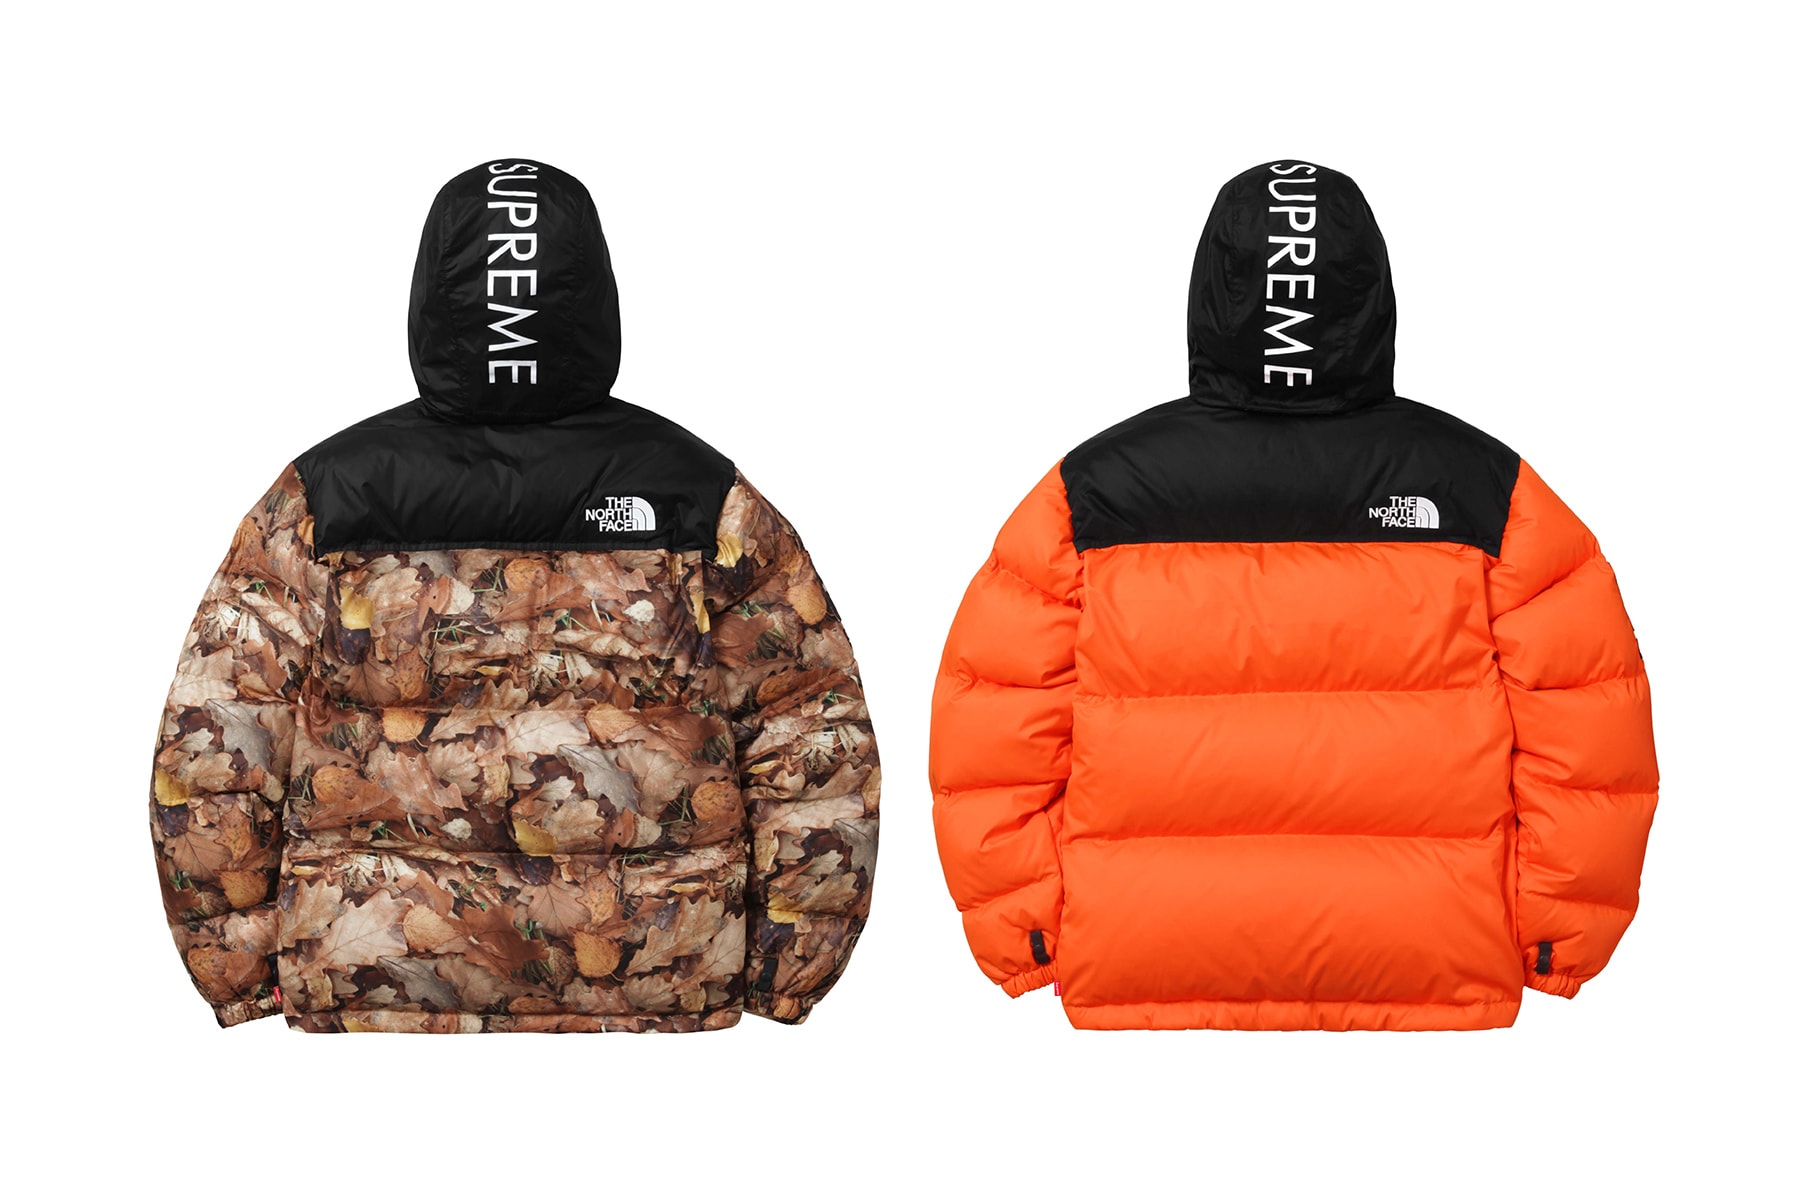 Supreme x The North Face 2016 Fall/Winter Jackets, Real Tree Camo, Tree Camo, Nuptse